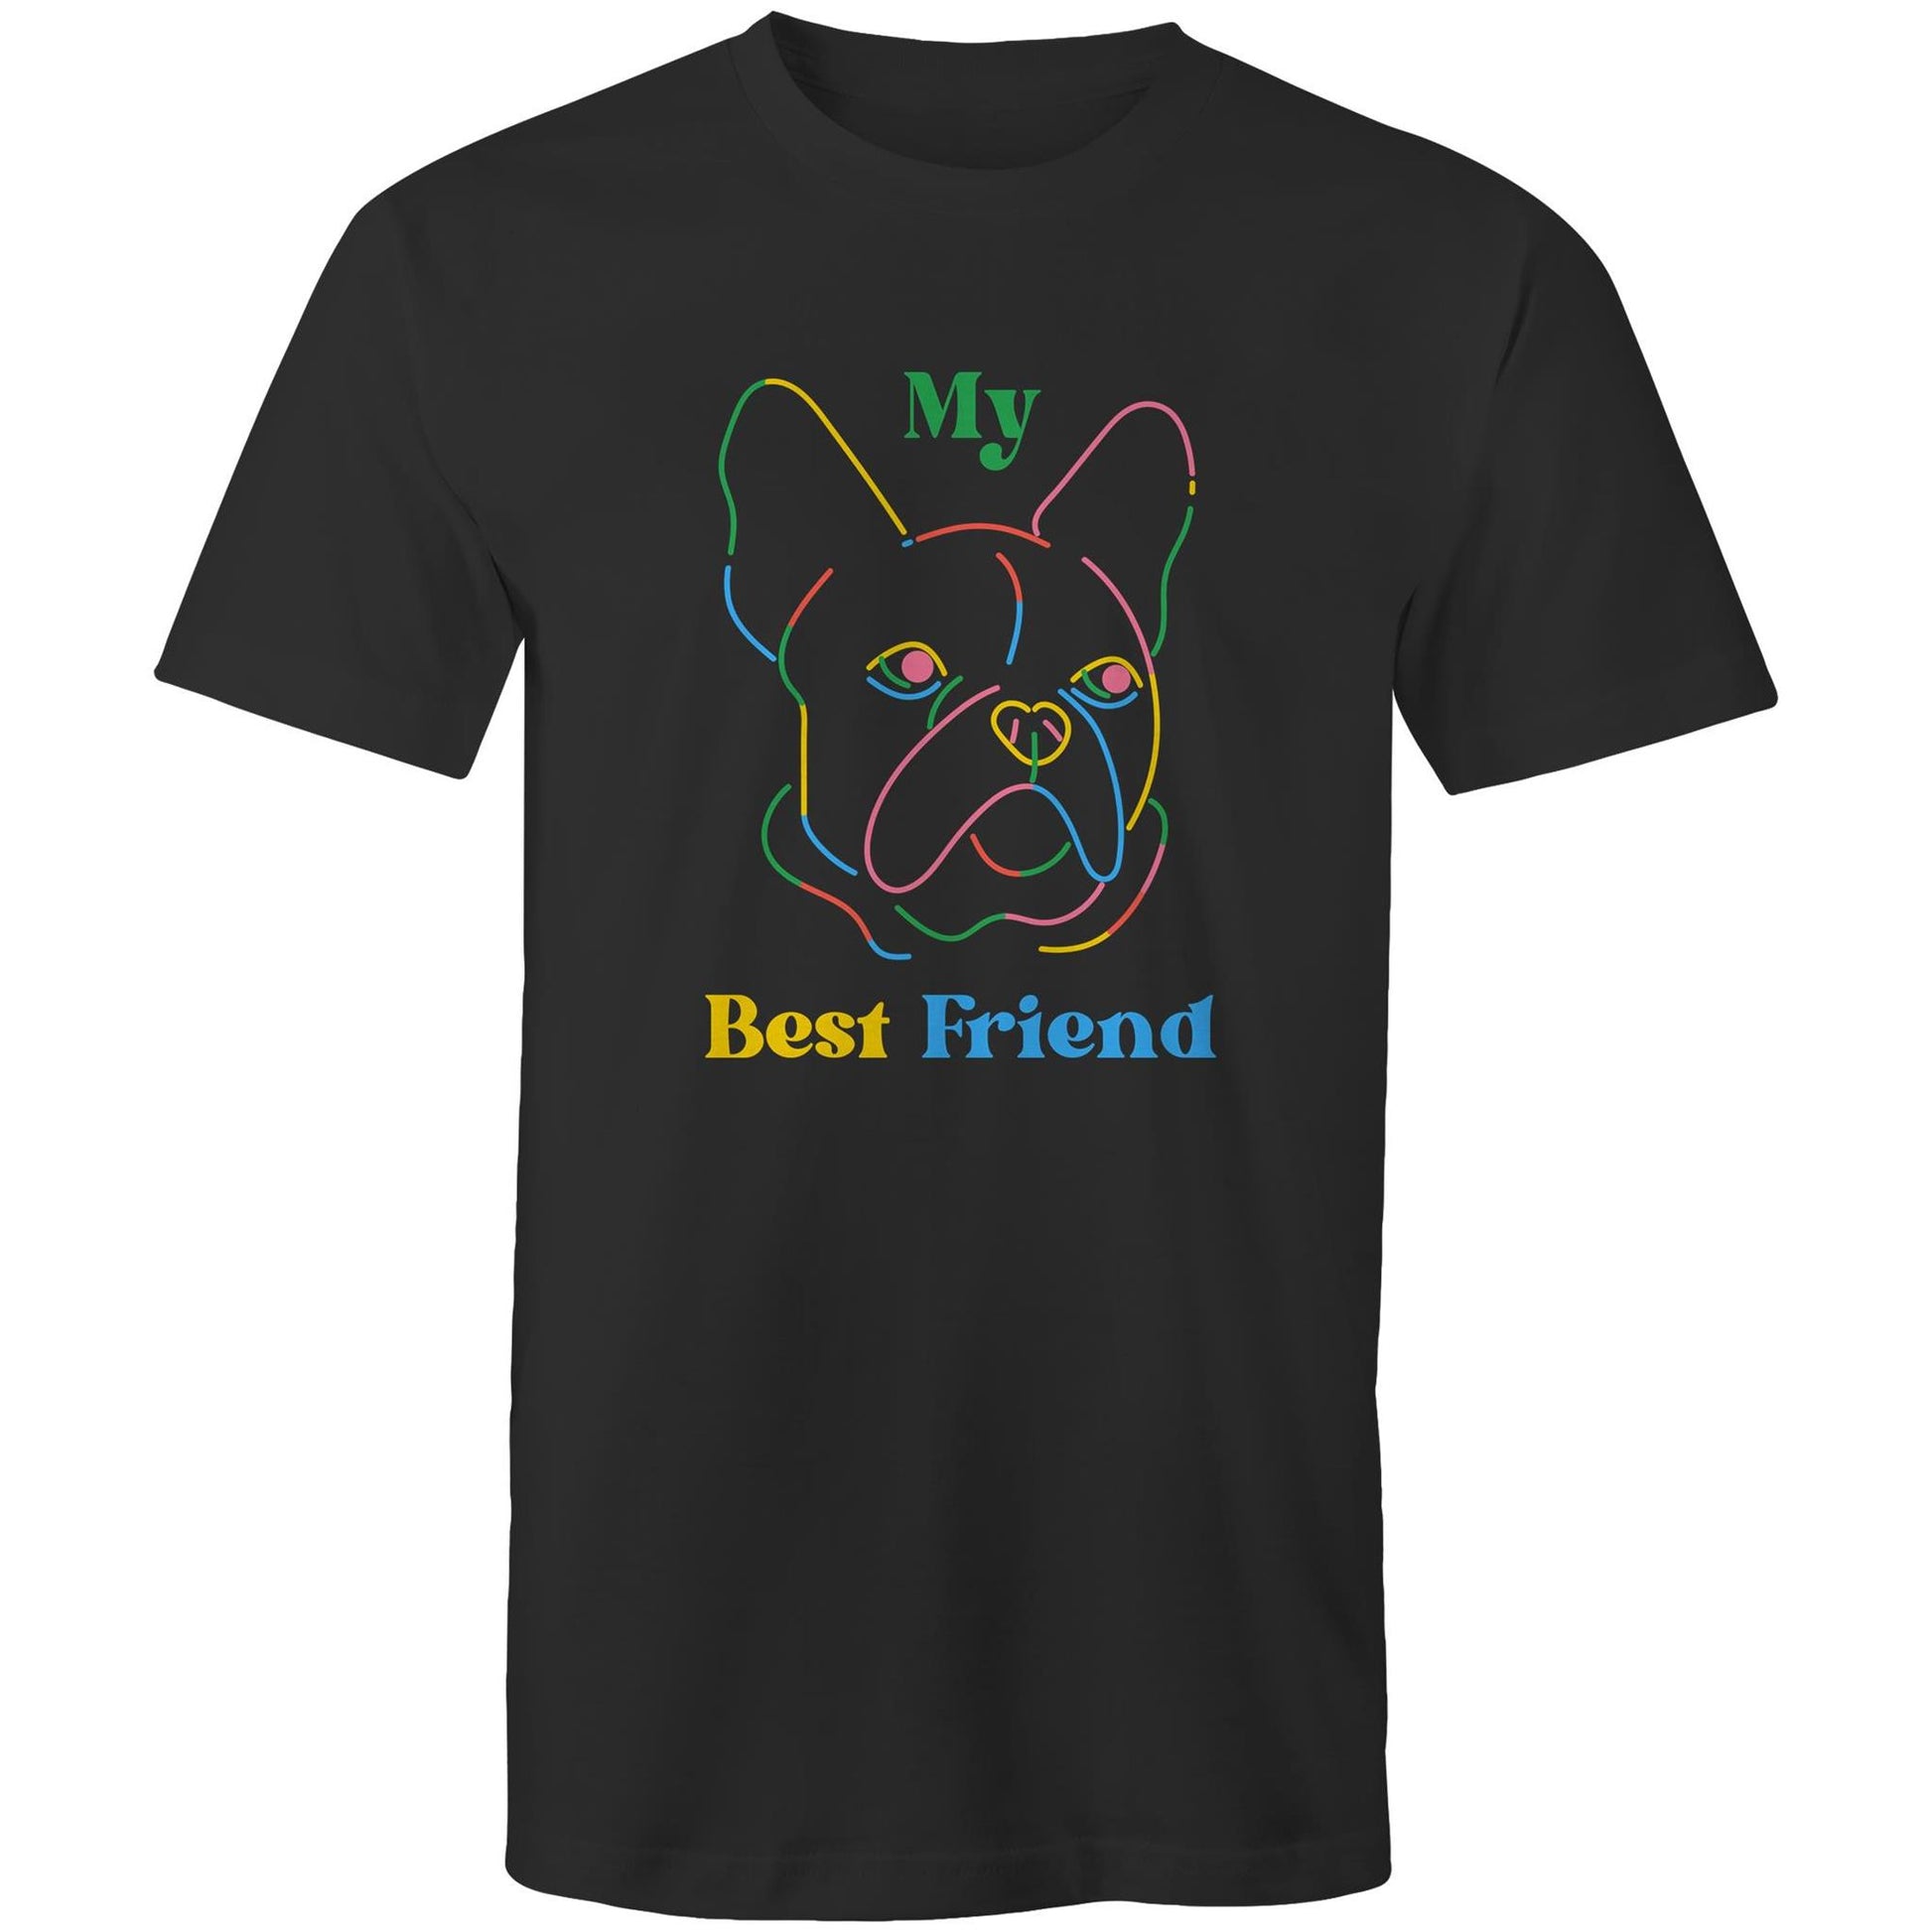 My Best Friend, Dog - Mens T-Shirt Black Mens T-shirt animal